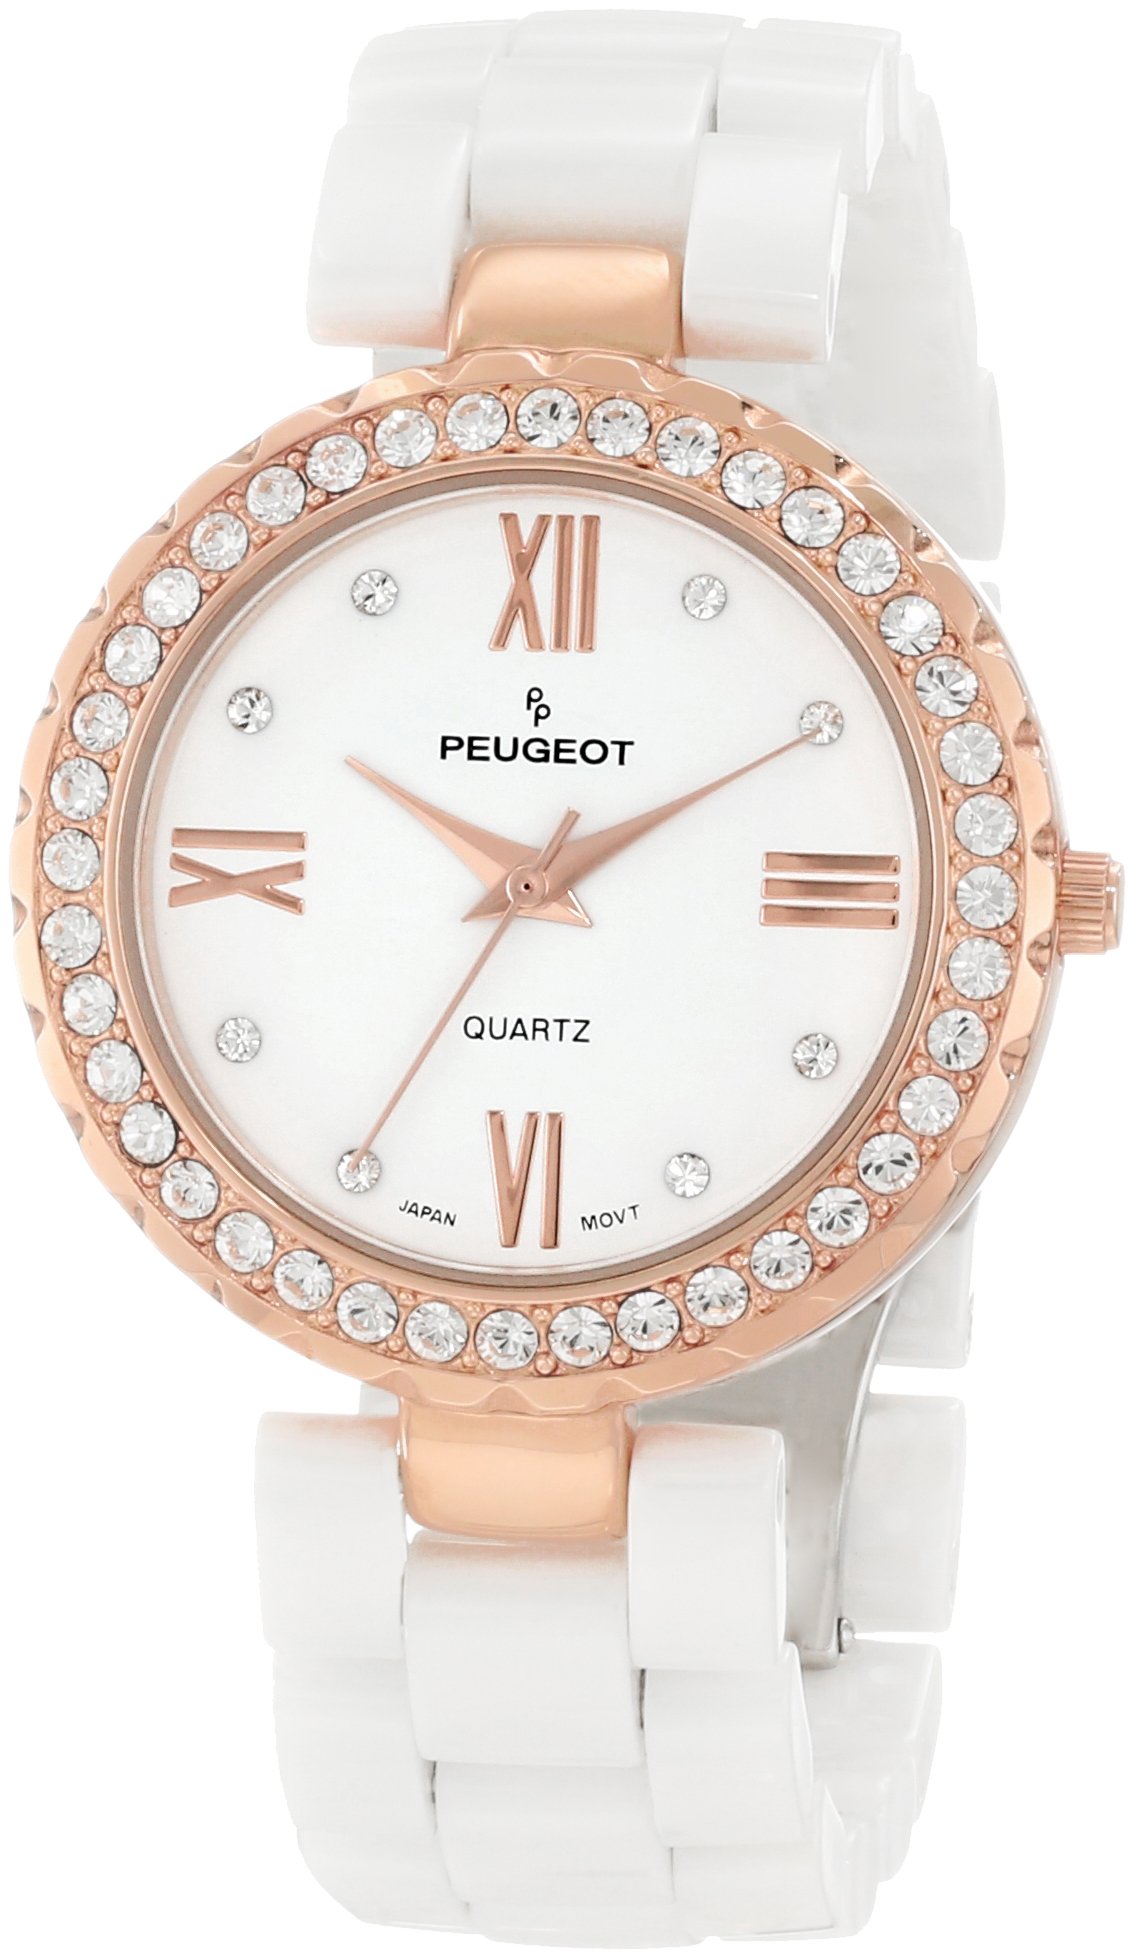 PP Peugeot Women's Ceramic Watch with Swarovski Crystal Bezel